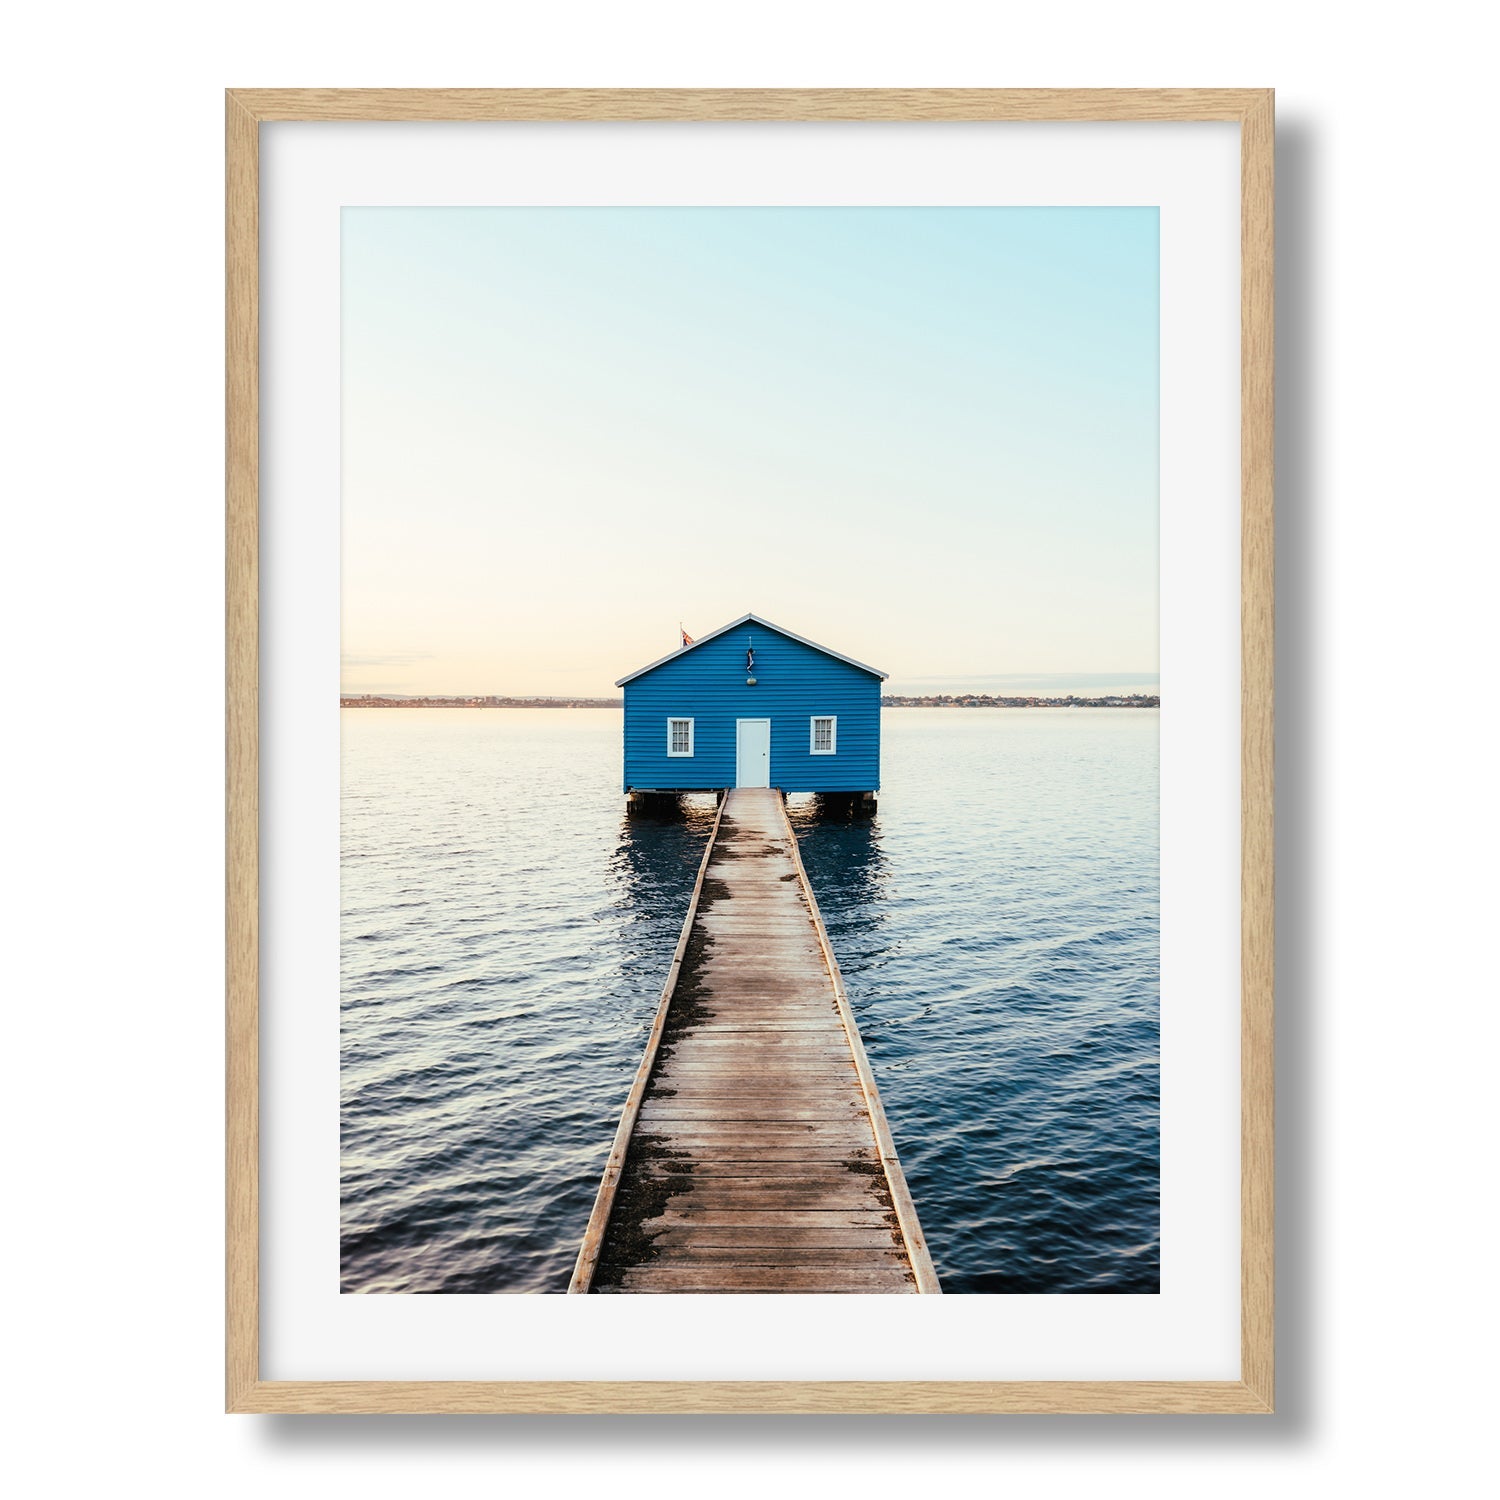 Perth Blue Boathouse - Peter Yan Studio